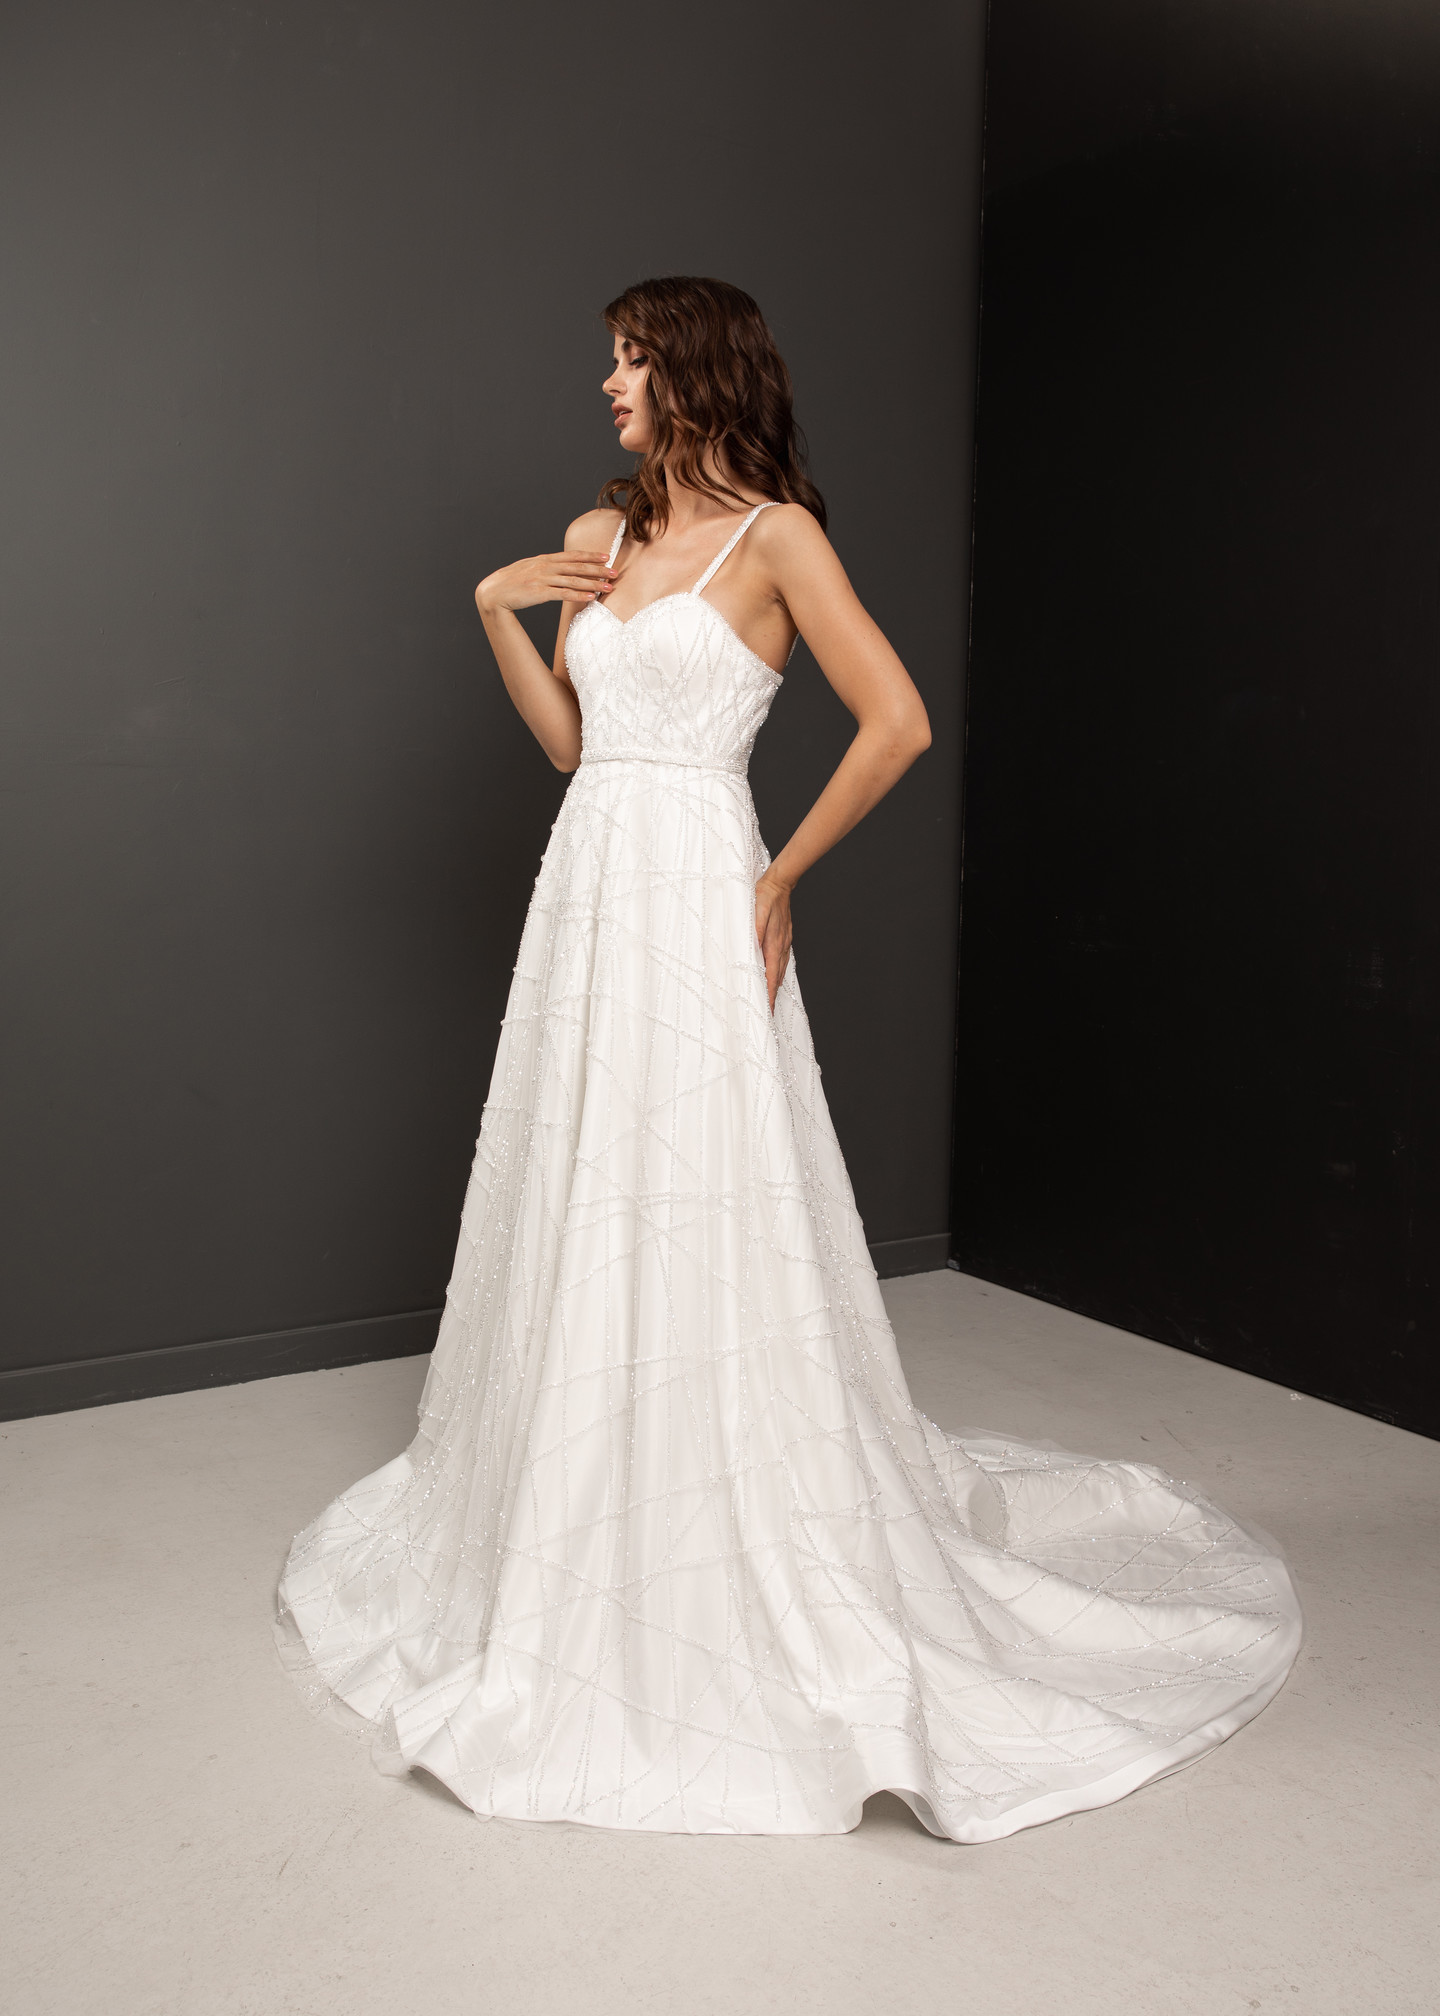 Gabi dress, 2021, couture, dress, bridal, off-white, embroidery, A-line, train